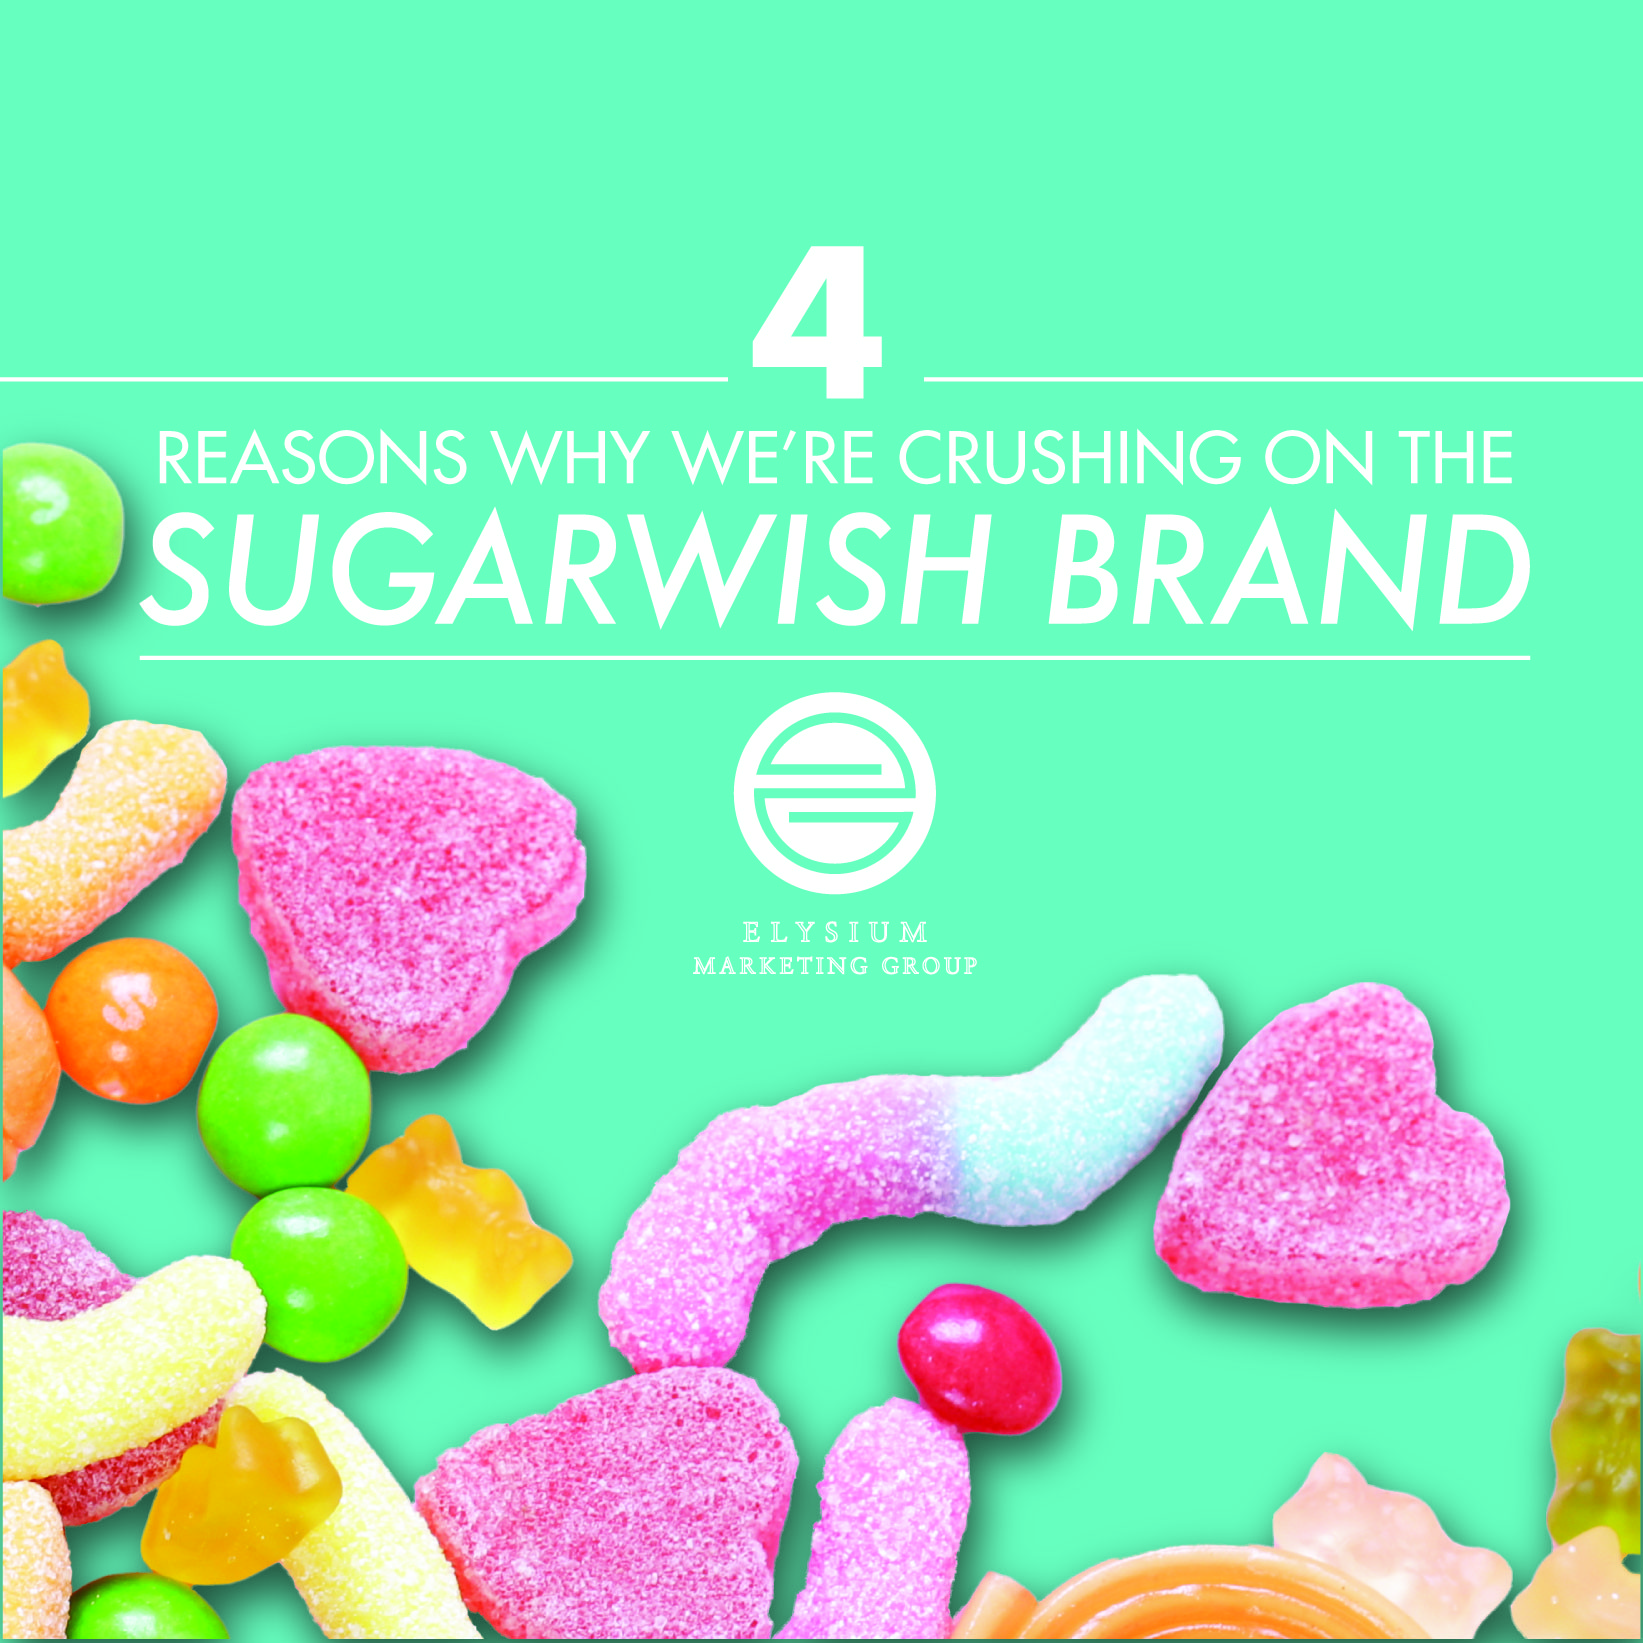 Reasons why we're crushing on the Sugarwish brand